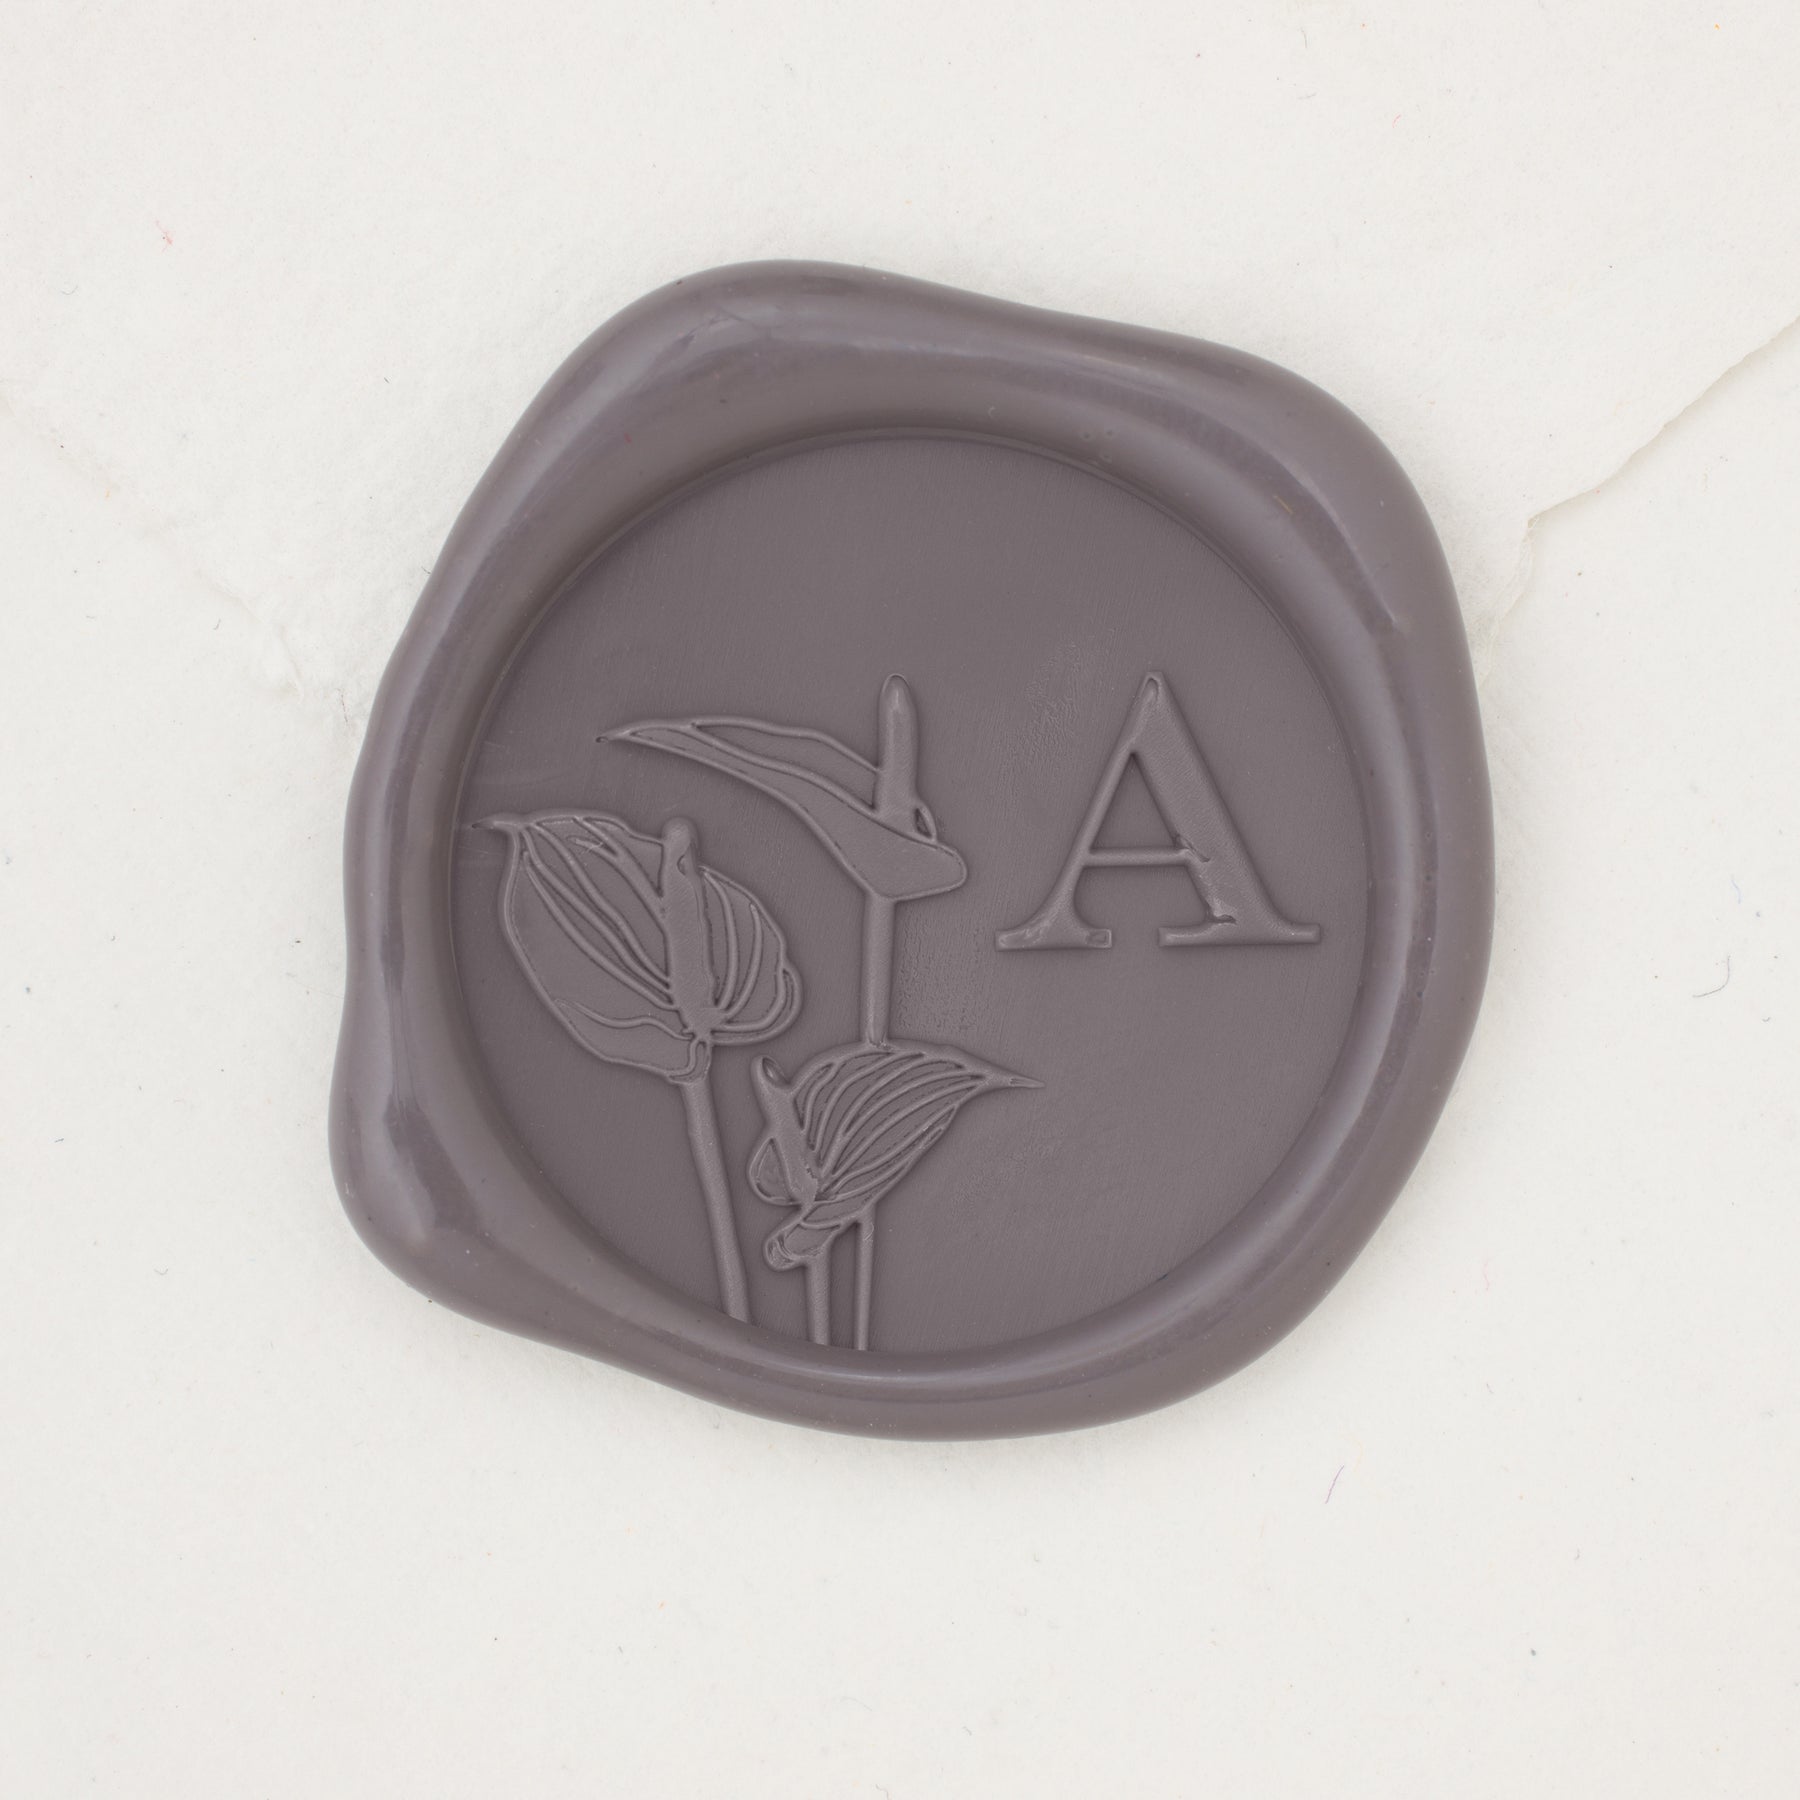 Anthurium Single Initial Wax Seals